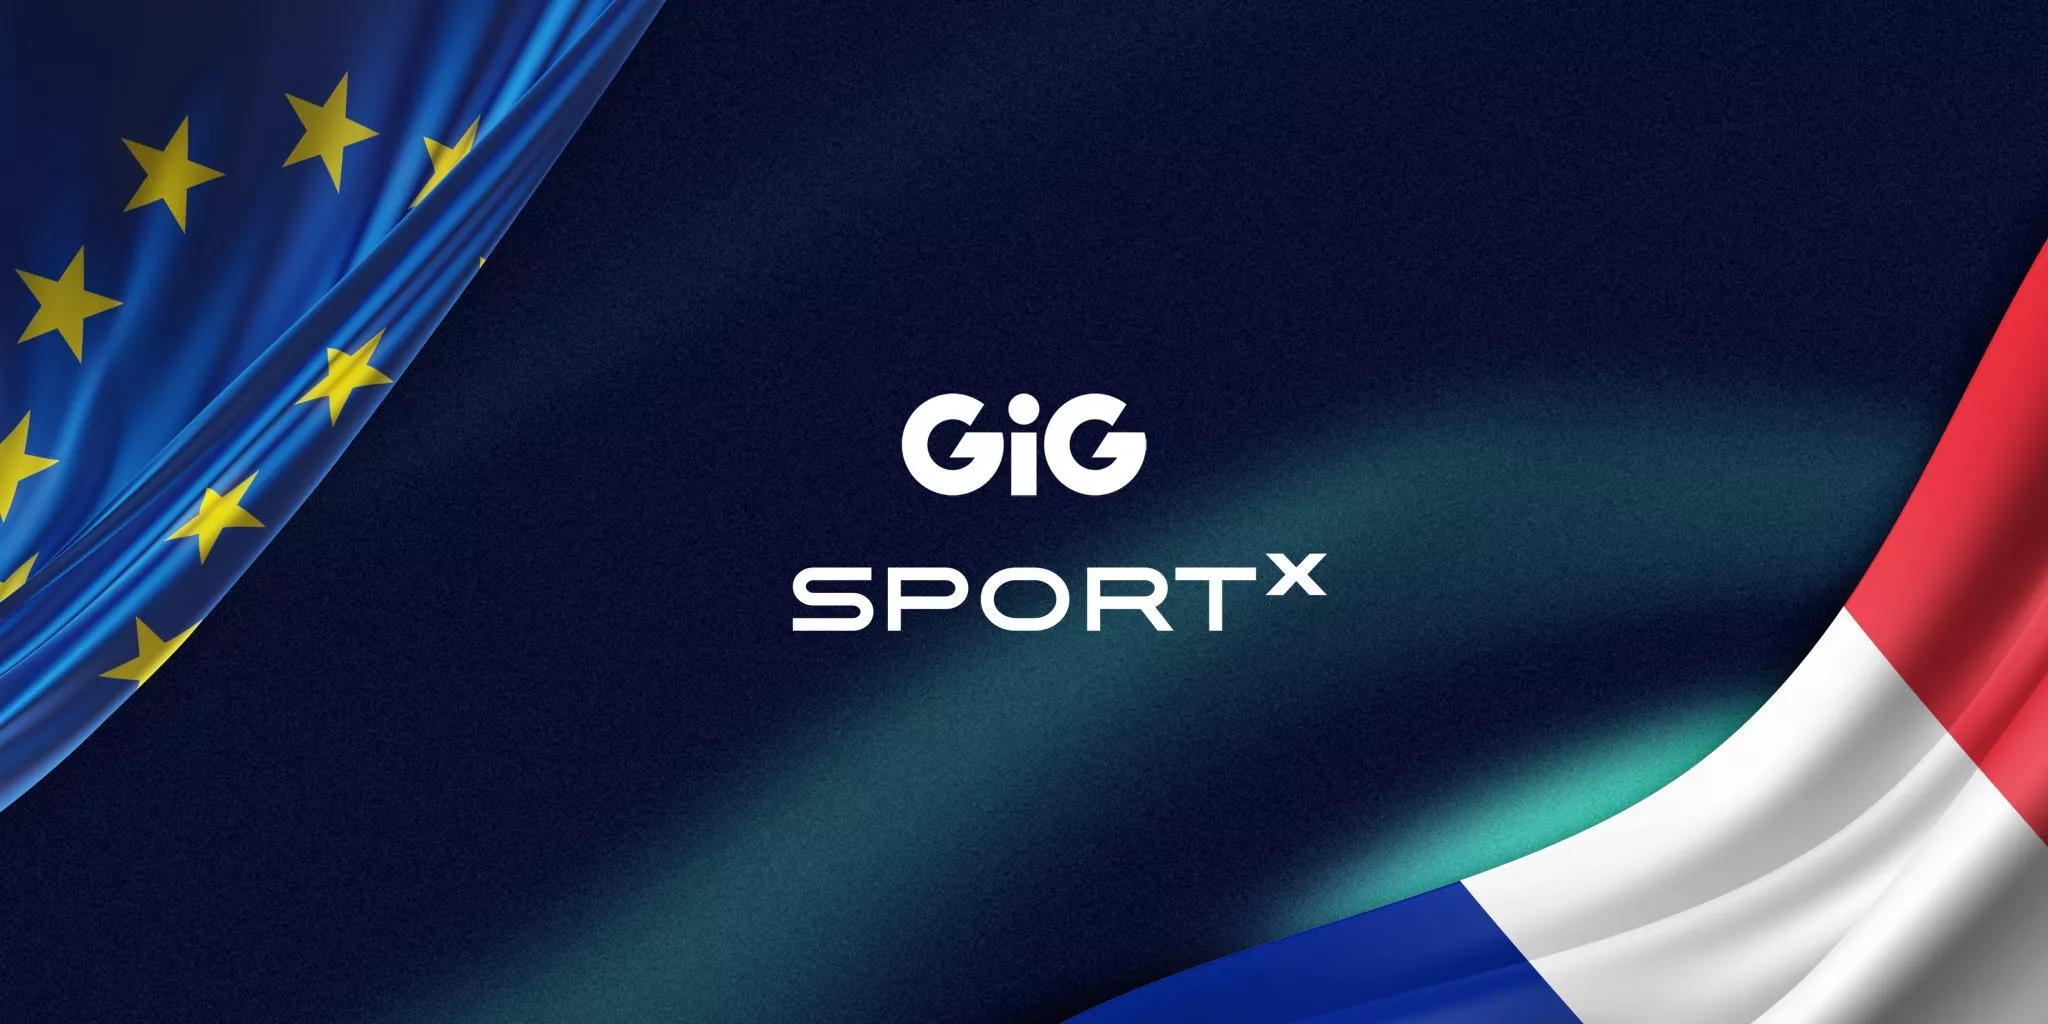 gig-sportx-logos-partnership